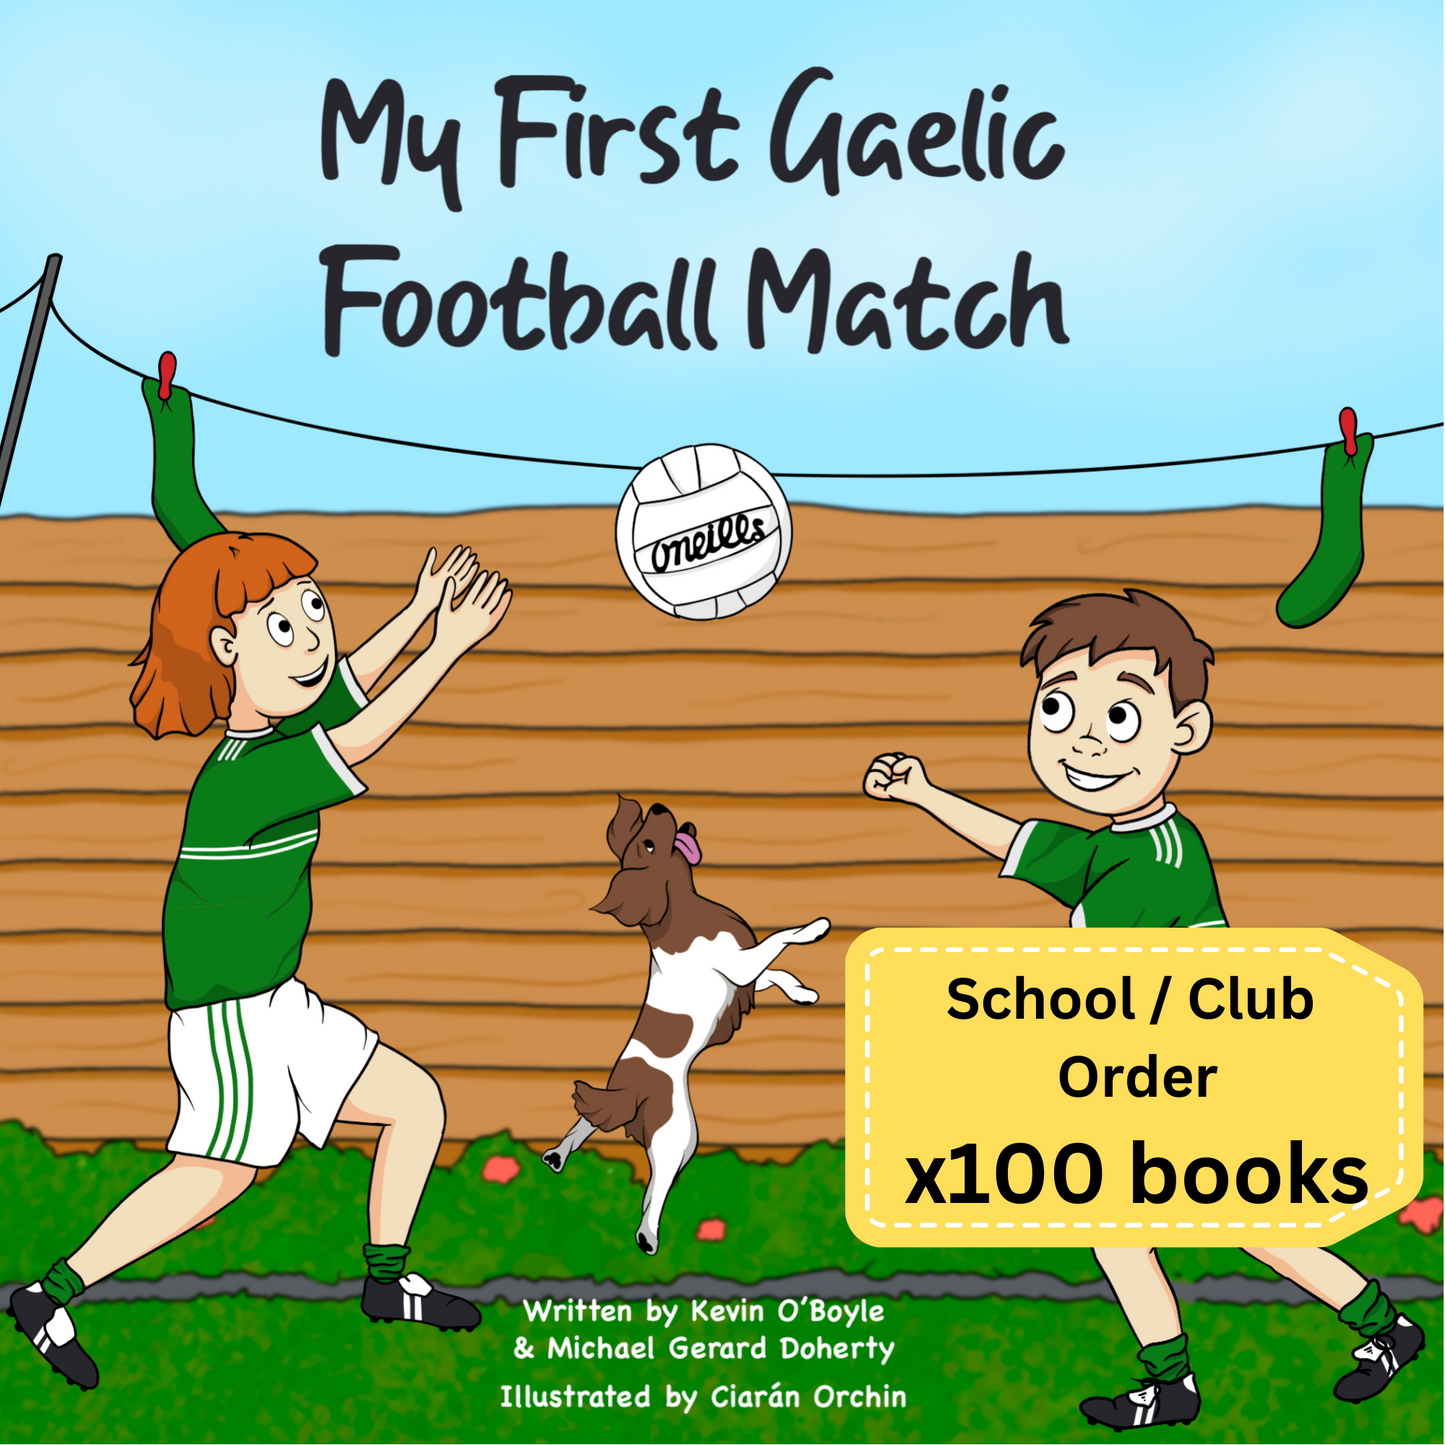 My First Gaelic Football Match (School/Club Pack x100 books)